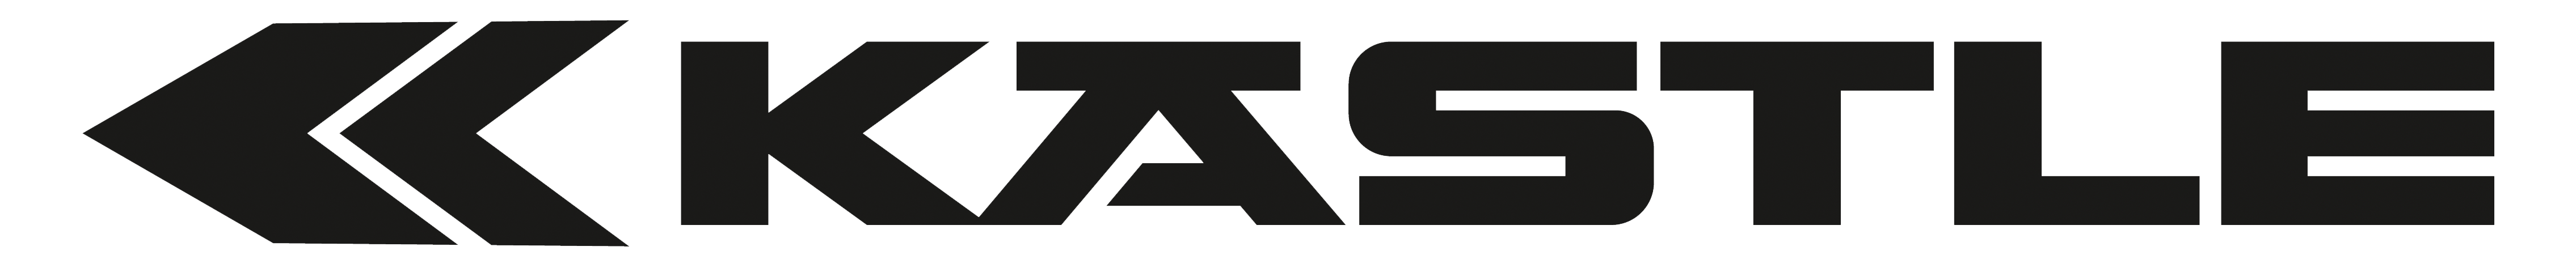 kaestle logo schwarz